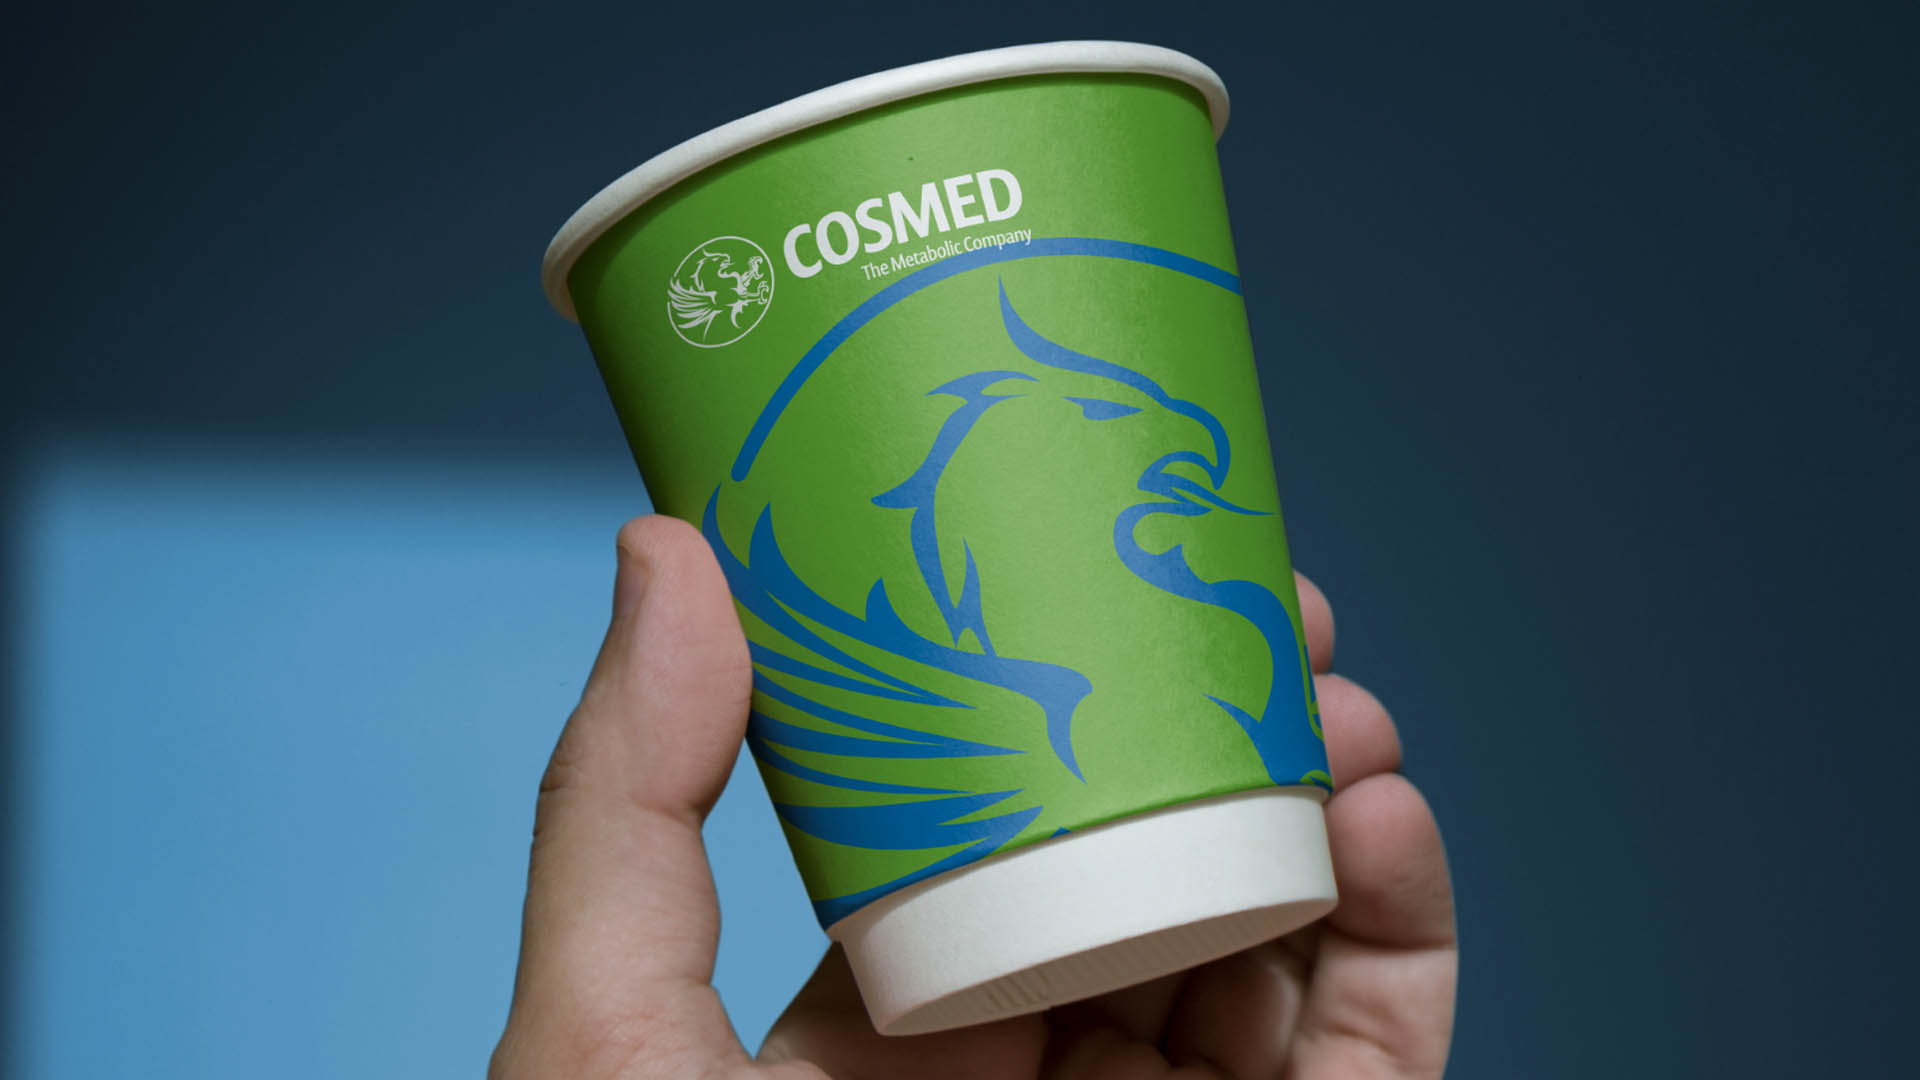 Cosmed, Schweinfurt - Werneck, Design Coffee Cup, Corporate Design, Werbung